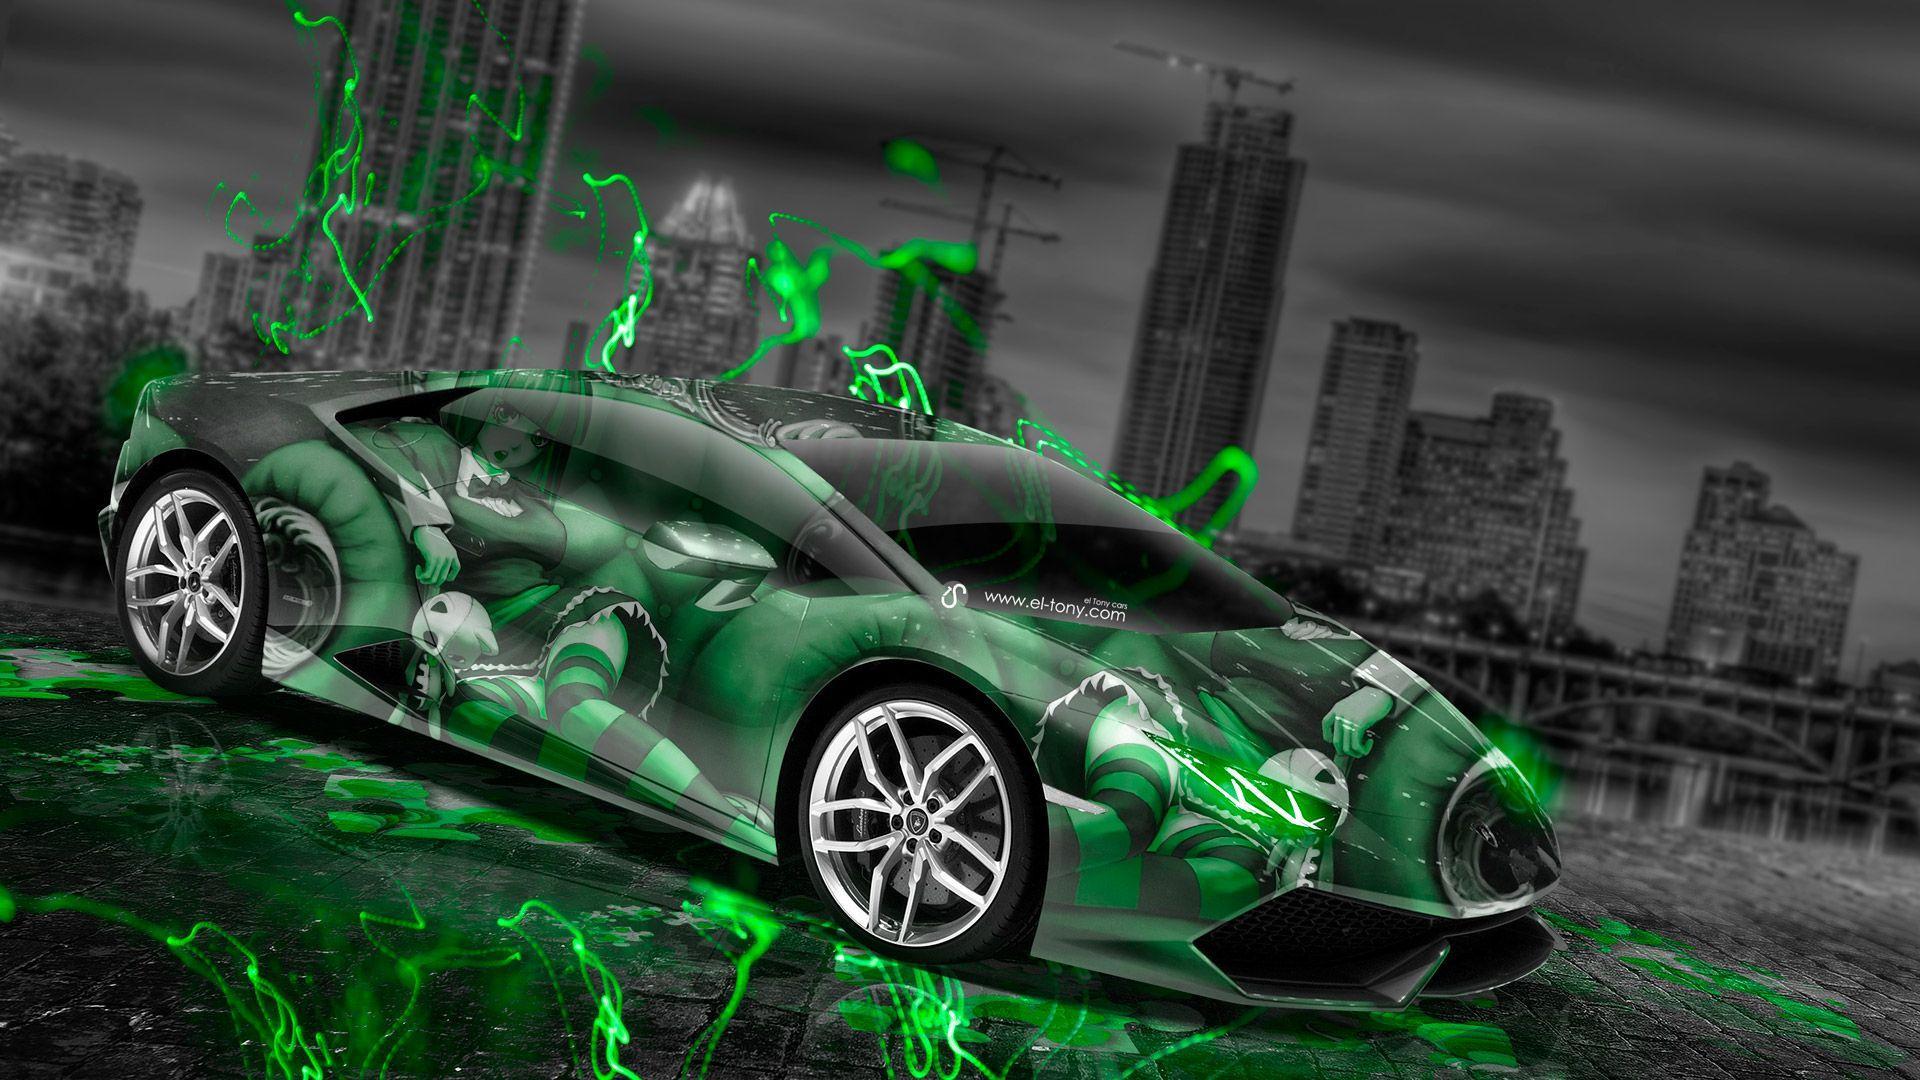 Neon Lamborghini Hd Wallpapers Top Free Neon Lamborghini Hd